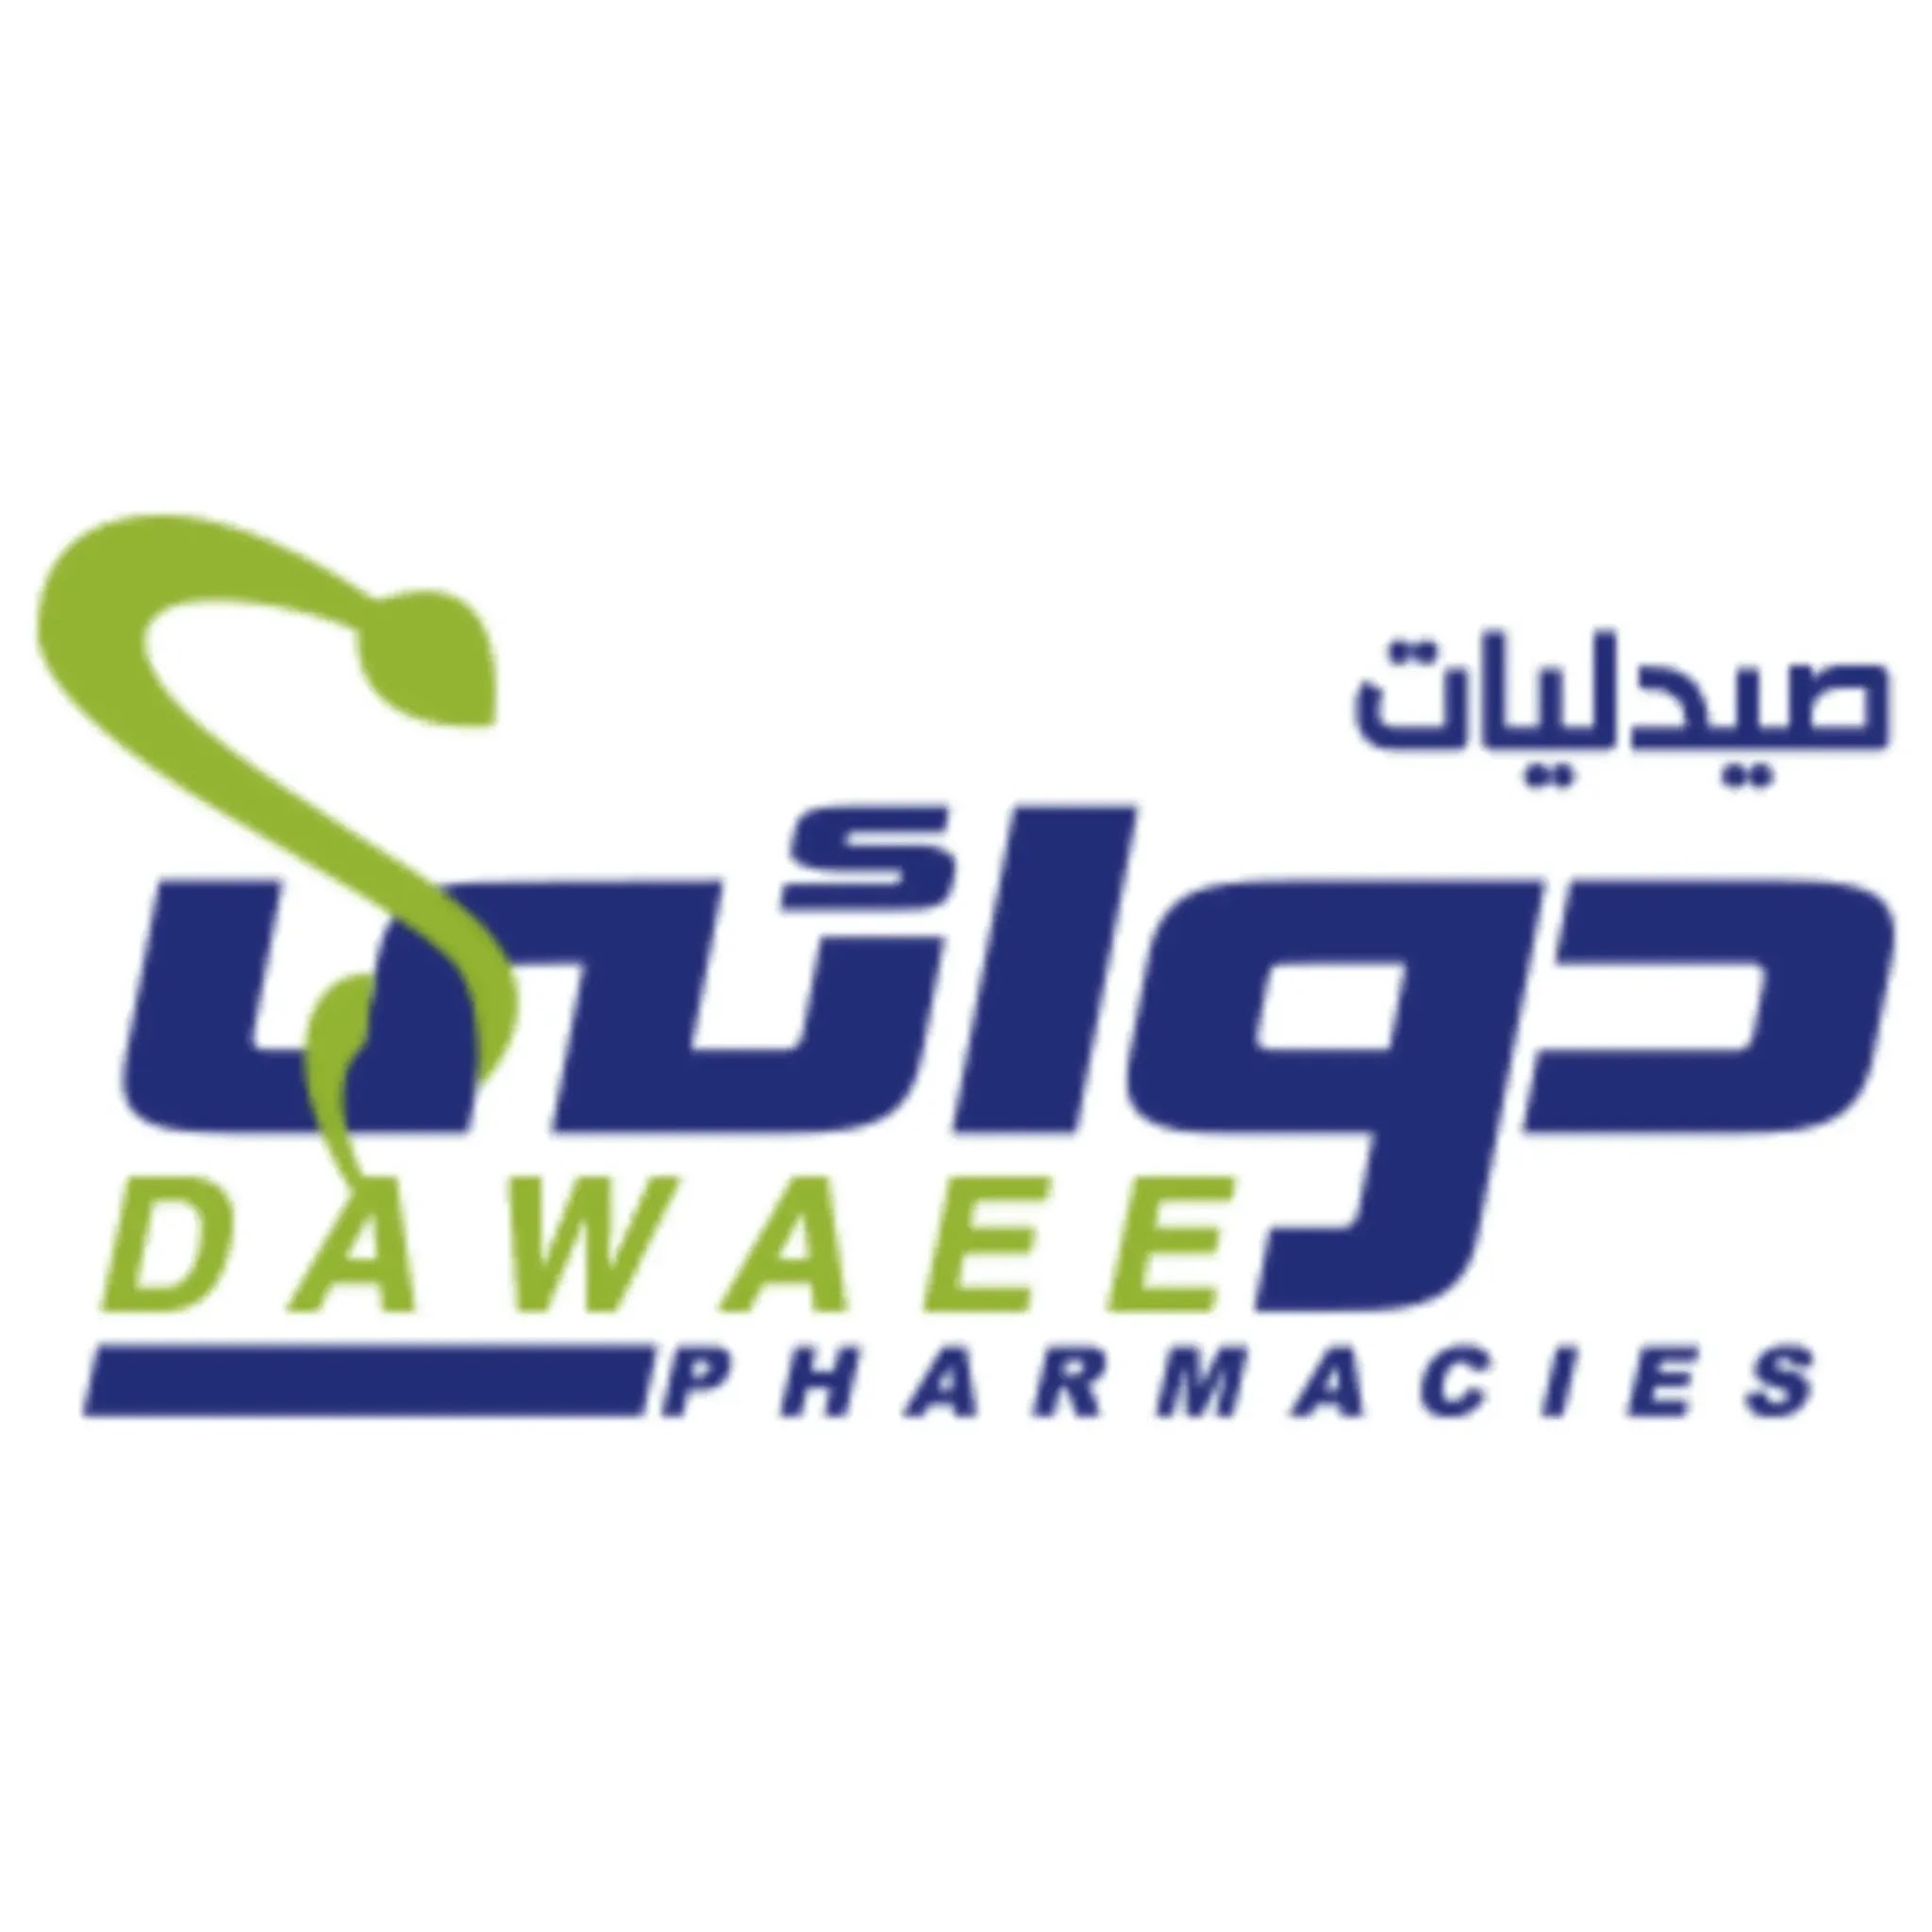 Dawaee Pharmacies 